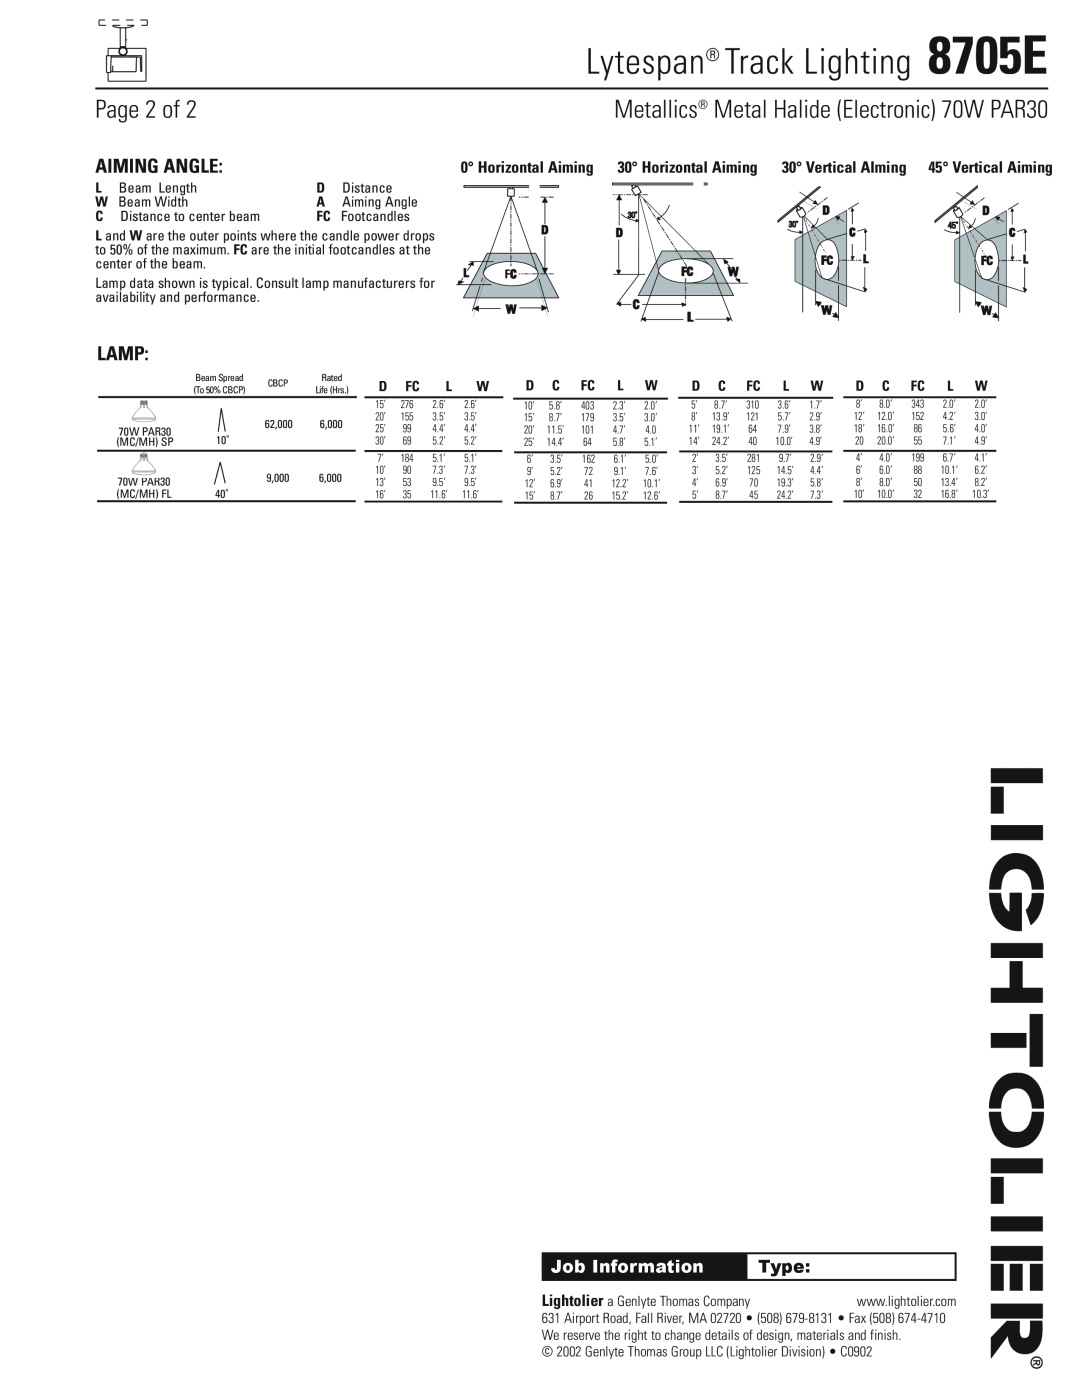 Lightolier Page 2 of, Type, Lytespan Track Lighting 8705E, Metallics Metal Halide Electronic 70W PAR30, Aiming Angle 